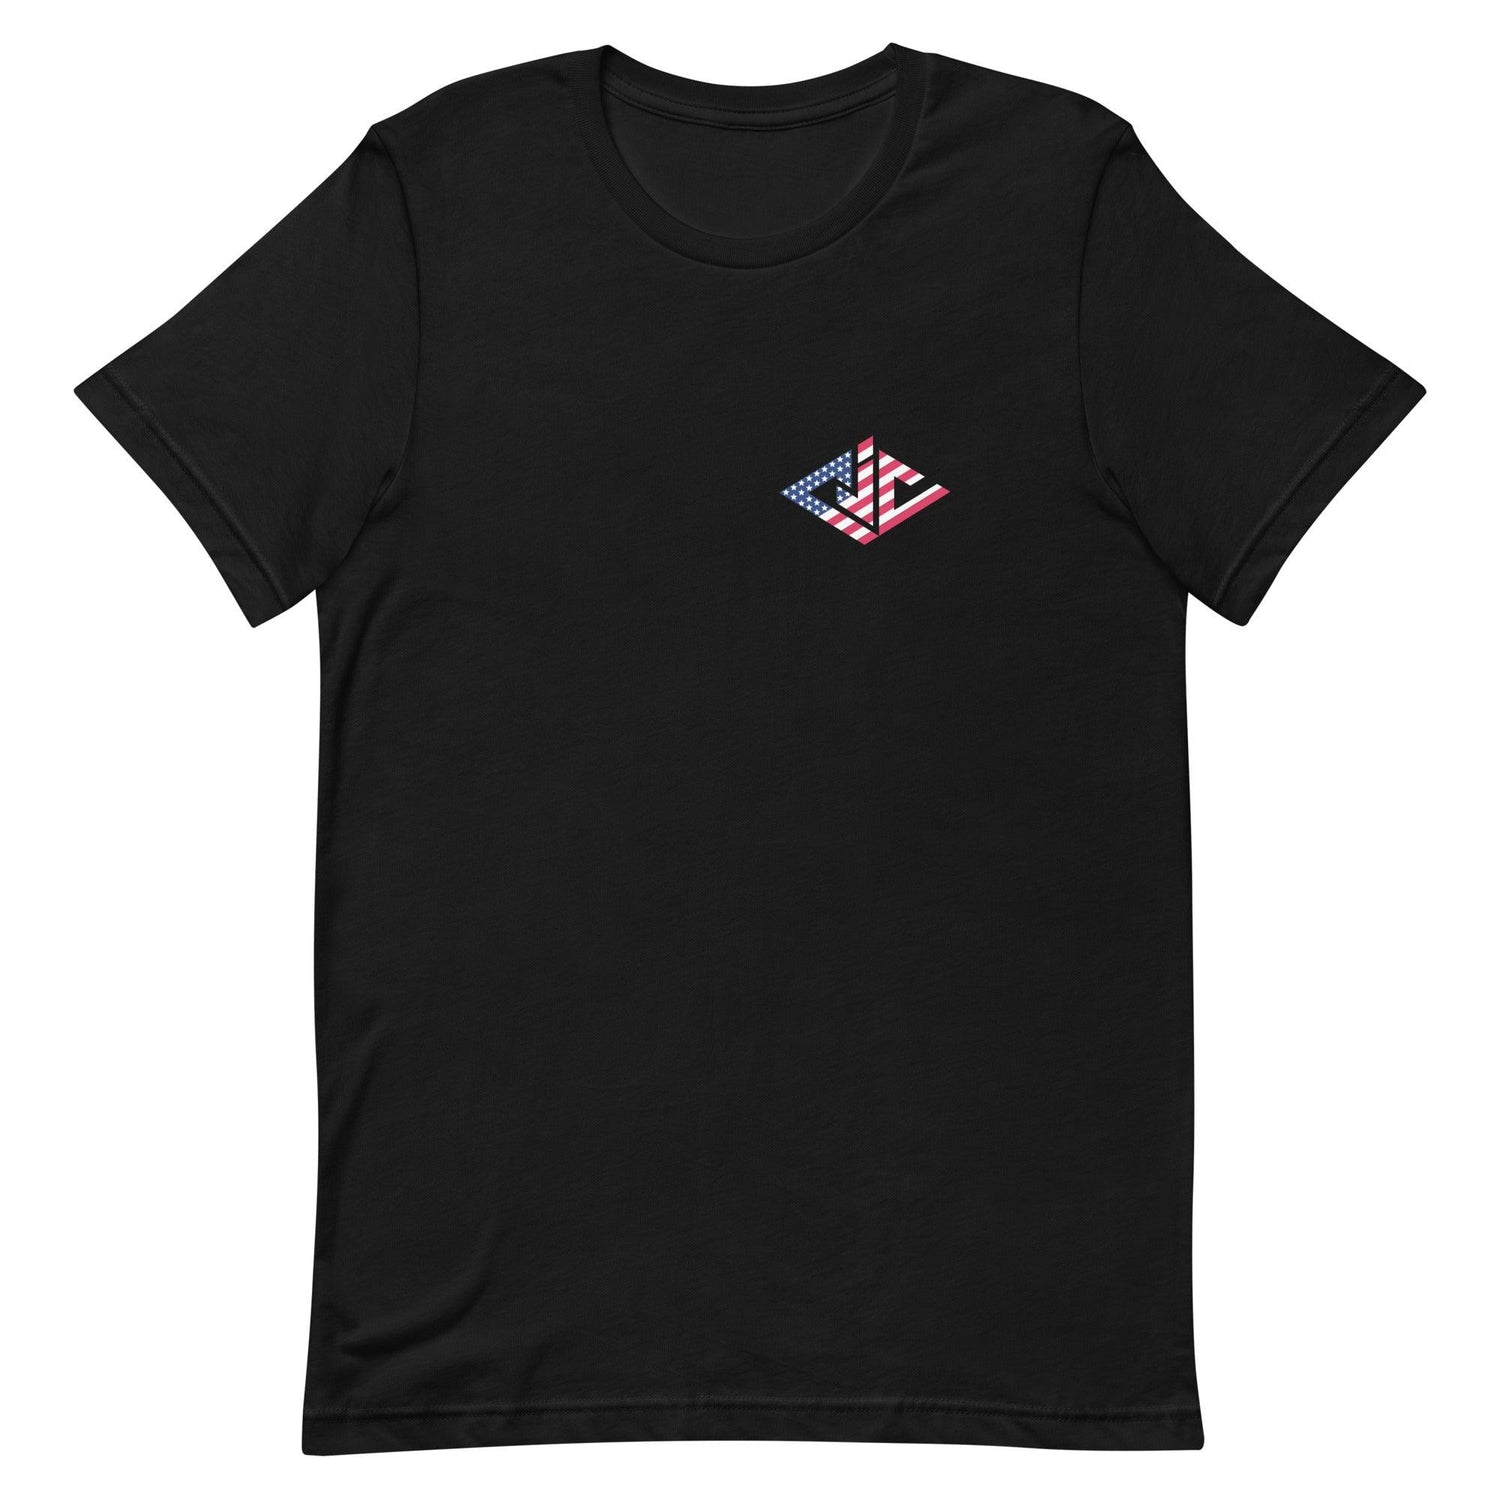 CJ Cummings “Signature” t-shirt - Fan Arch